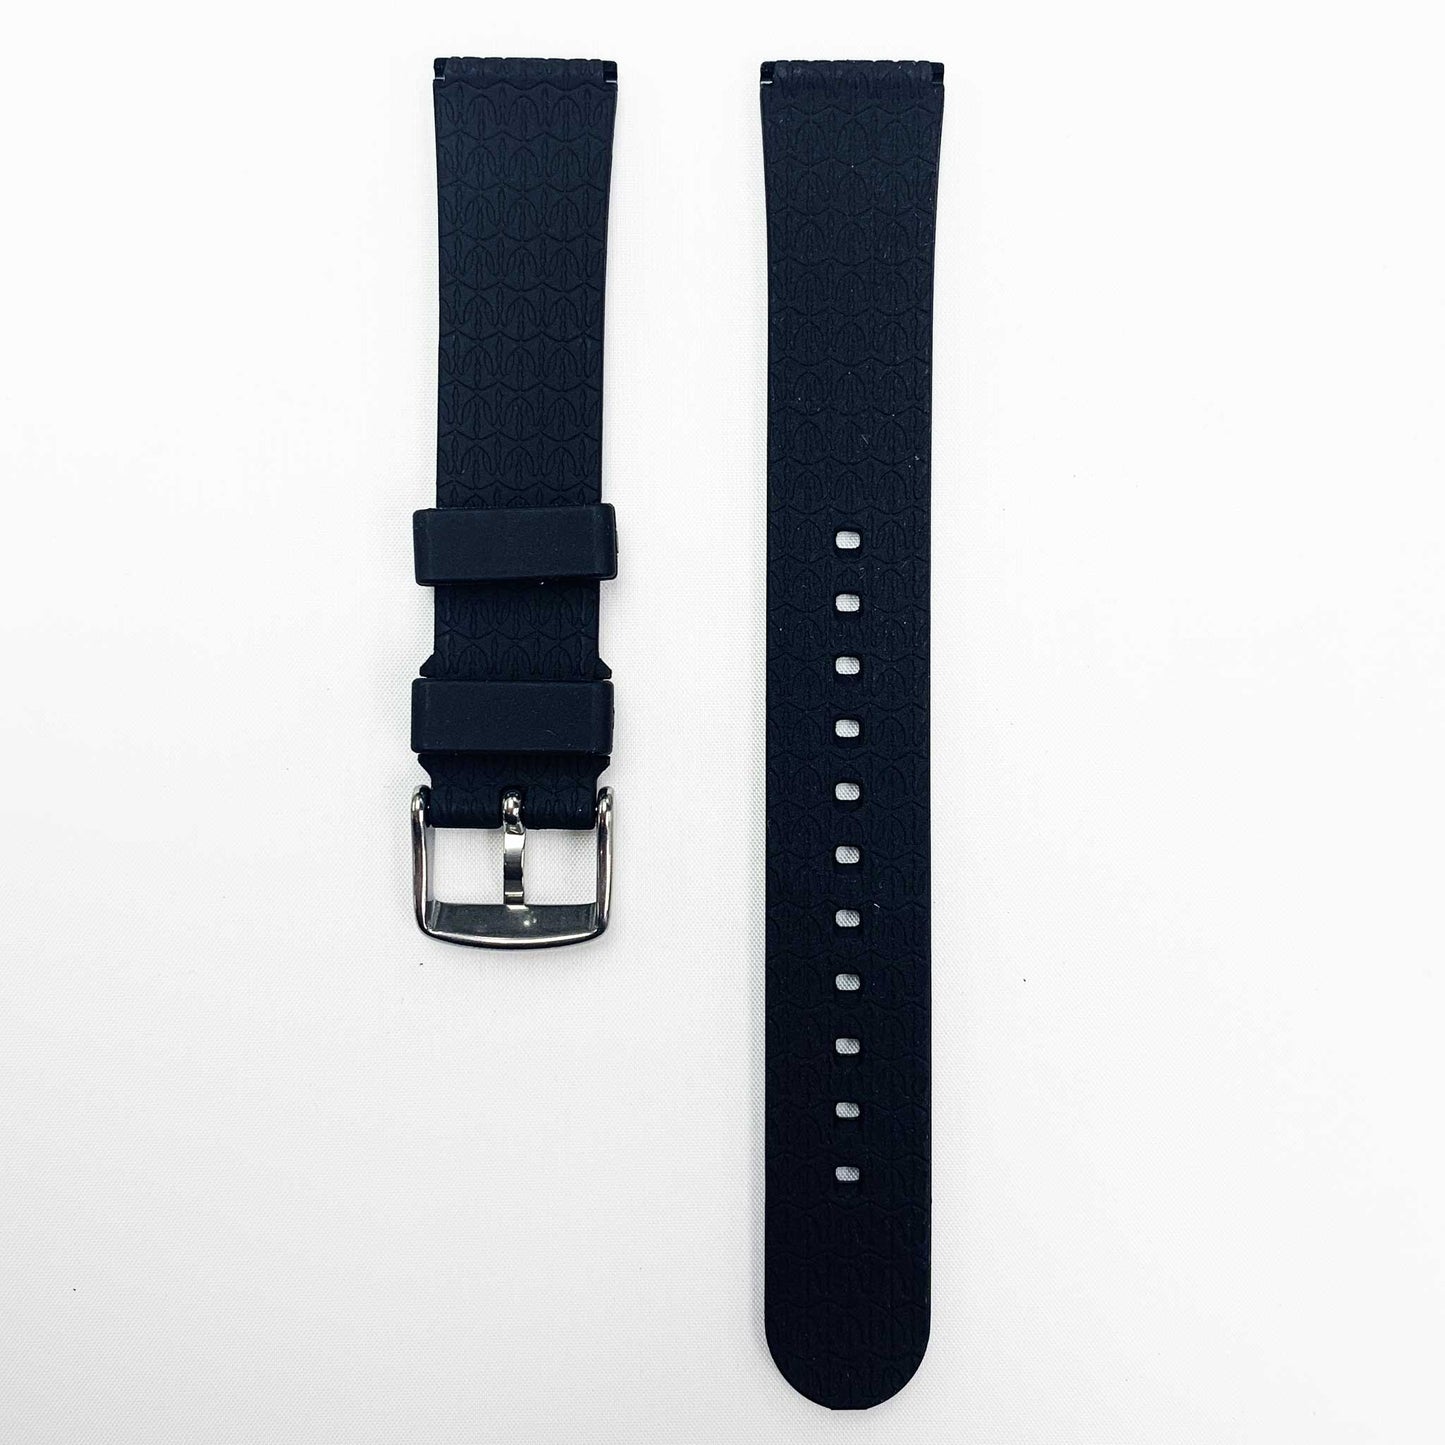 20mm pvc plastic watch band black xl for casio timex seiko citizen iron man watches